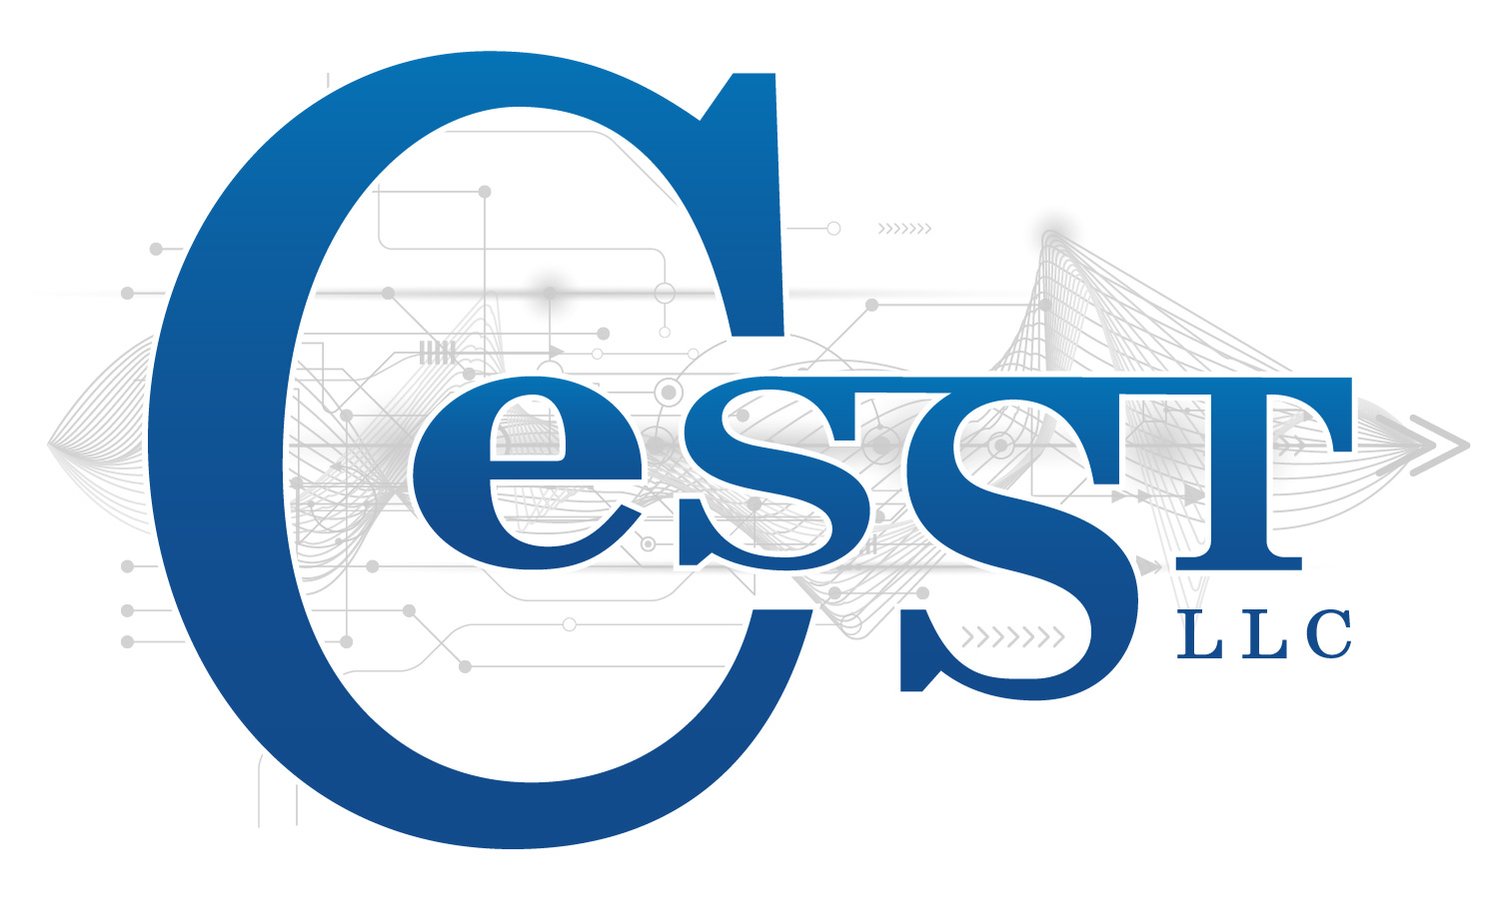 CESST, LLC